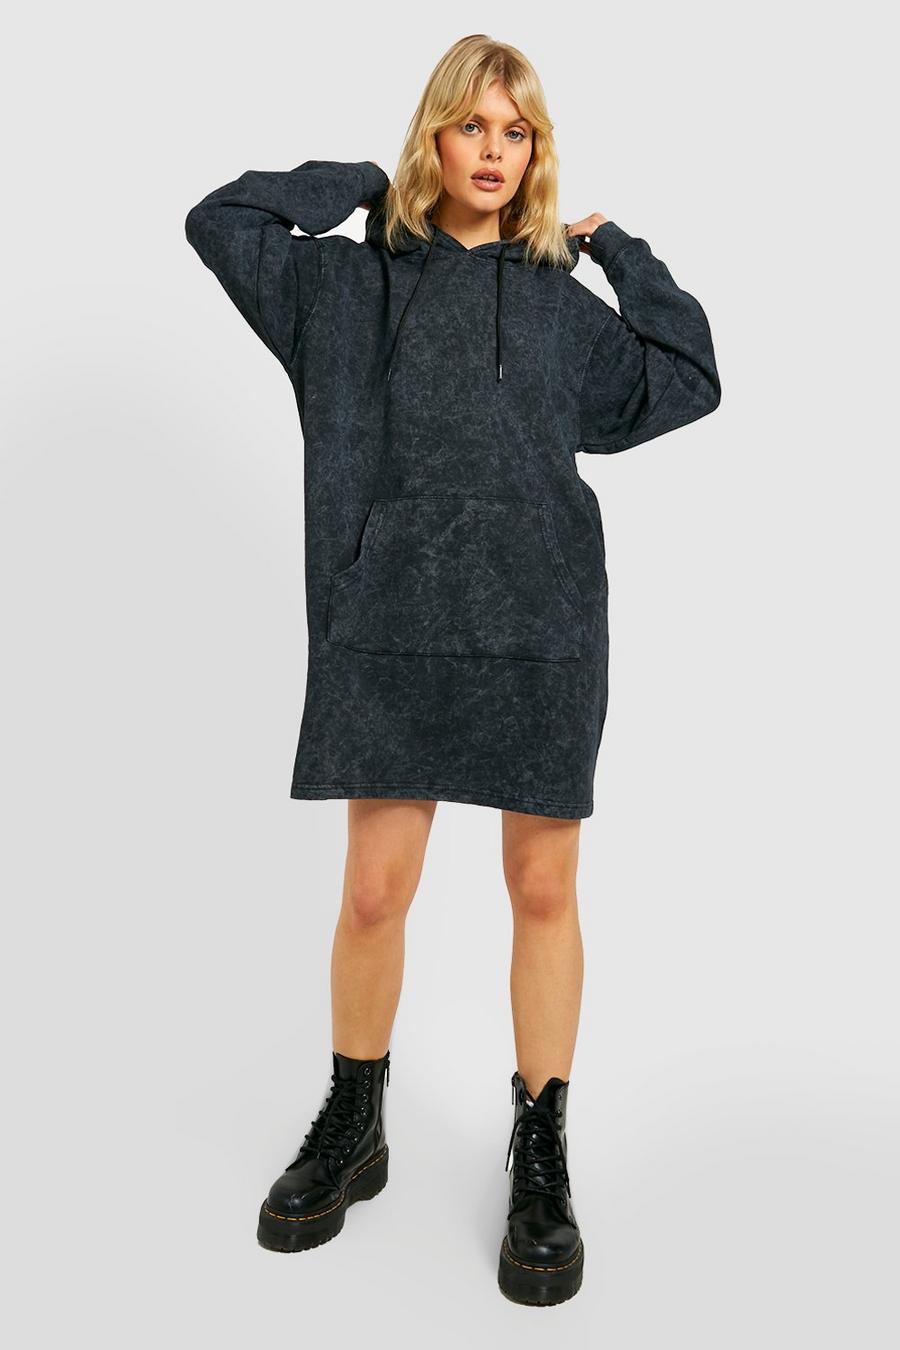 Charcoal grey Acid Wash Oversized Hooded Sweat Dress